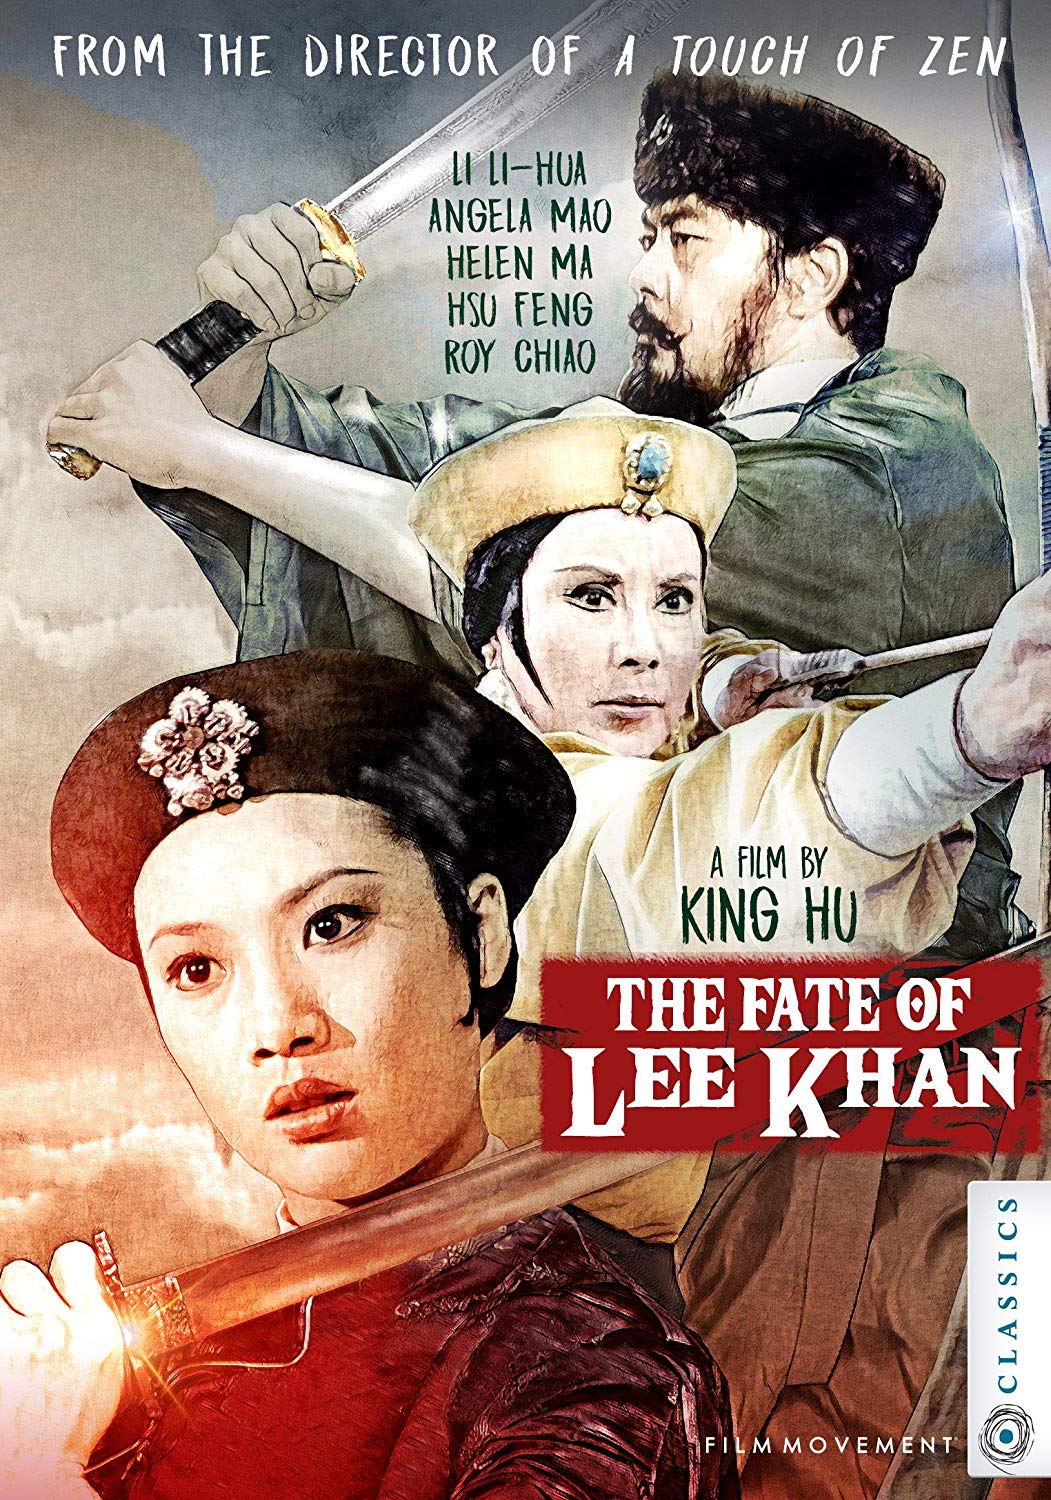 Fate of Lee Khan cover art